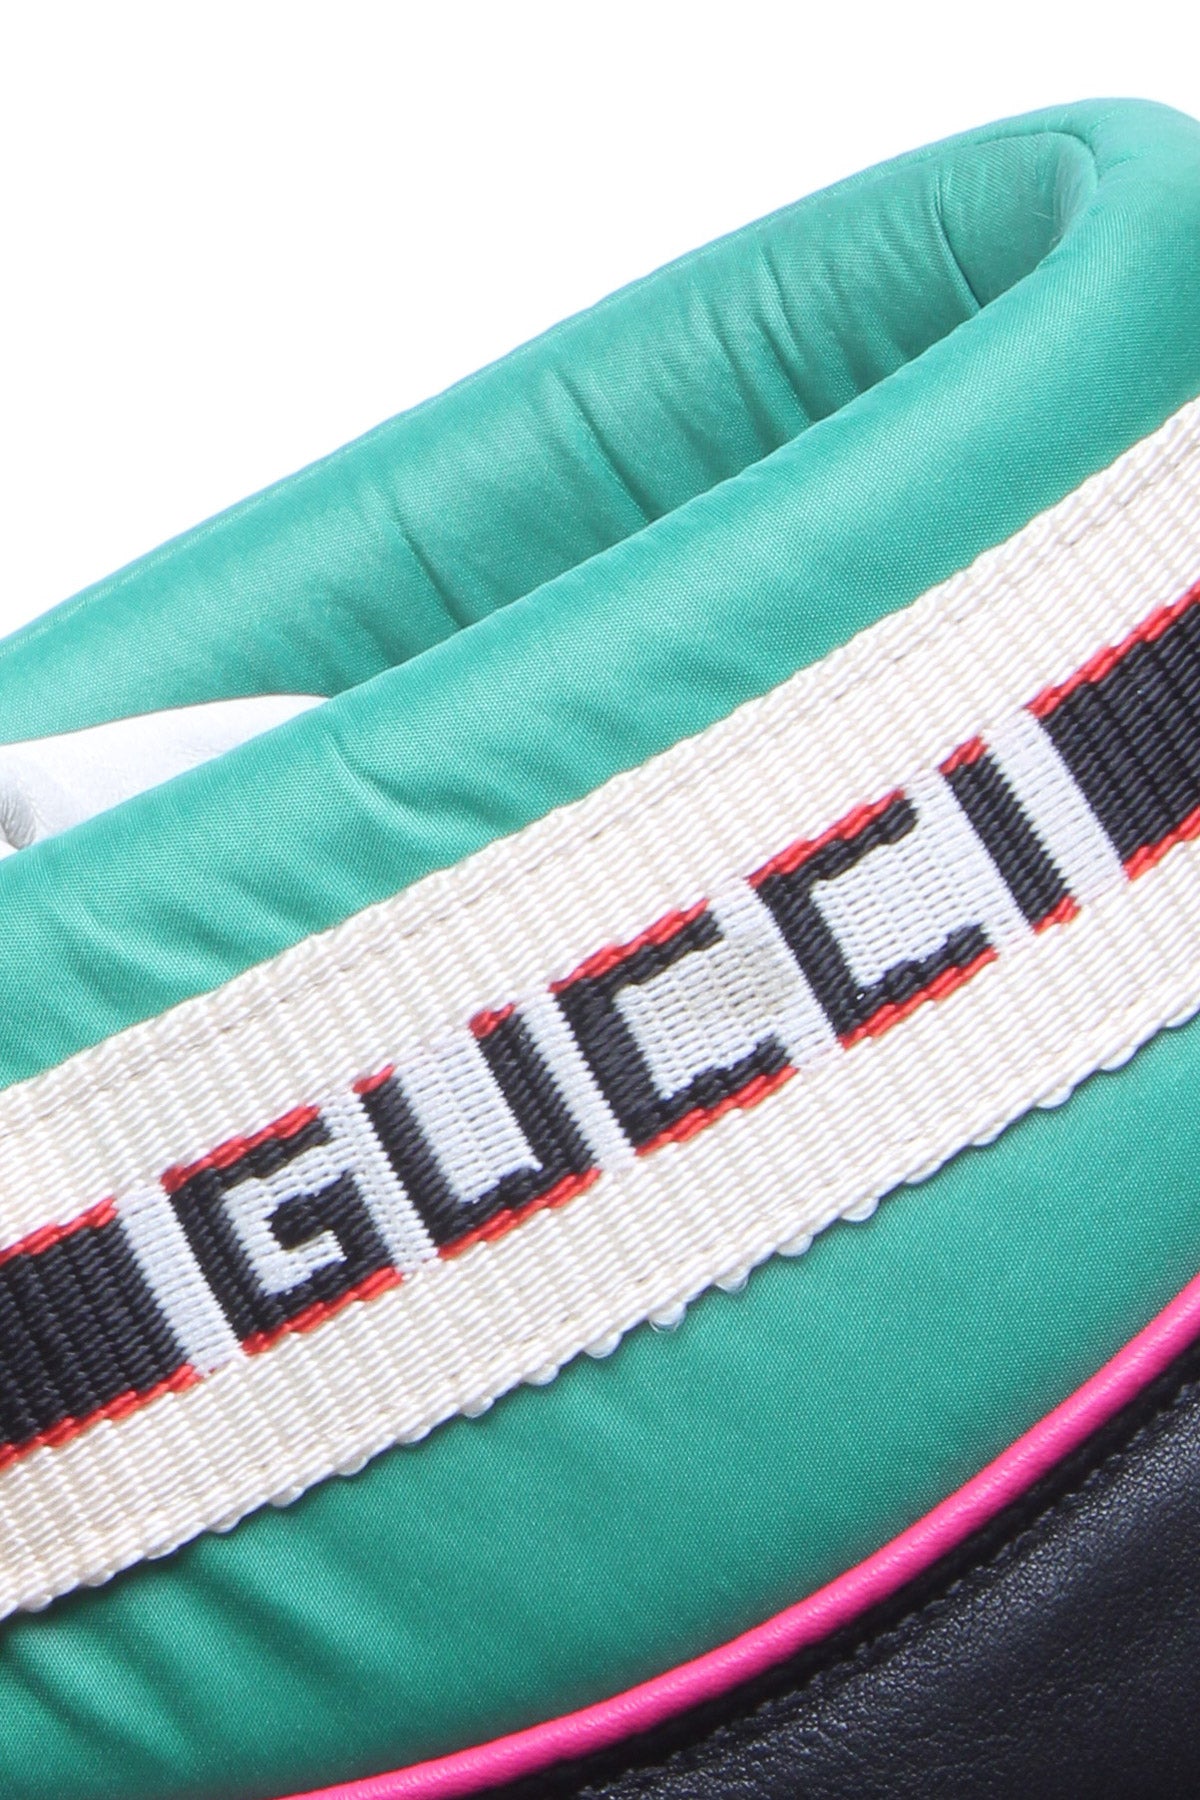 Gucci Men's Gucci x Balenciaga Flora Triple S Sneakers - US Size 11